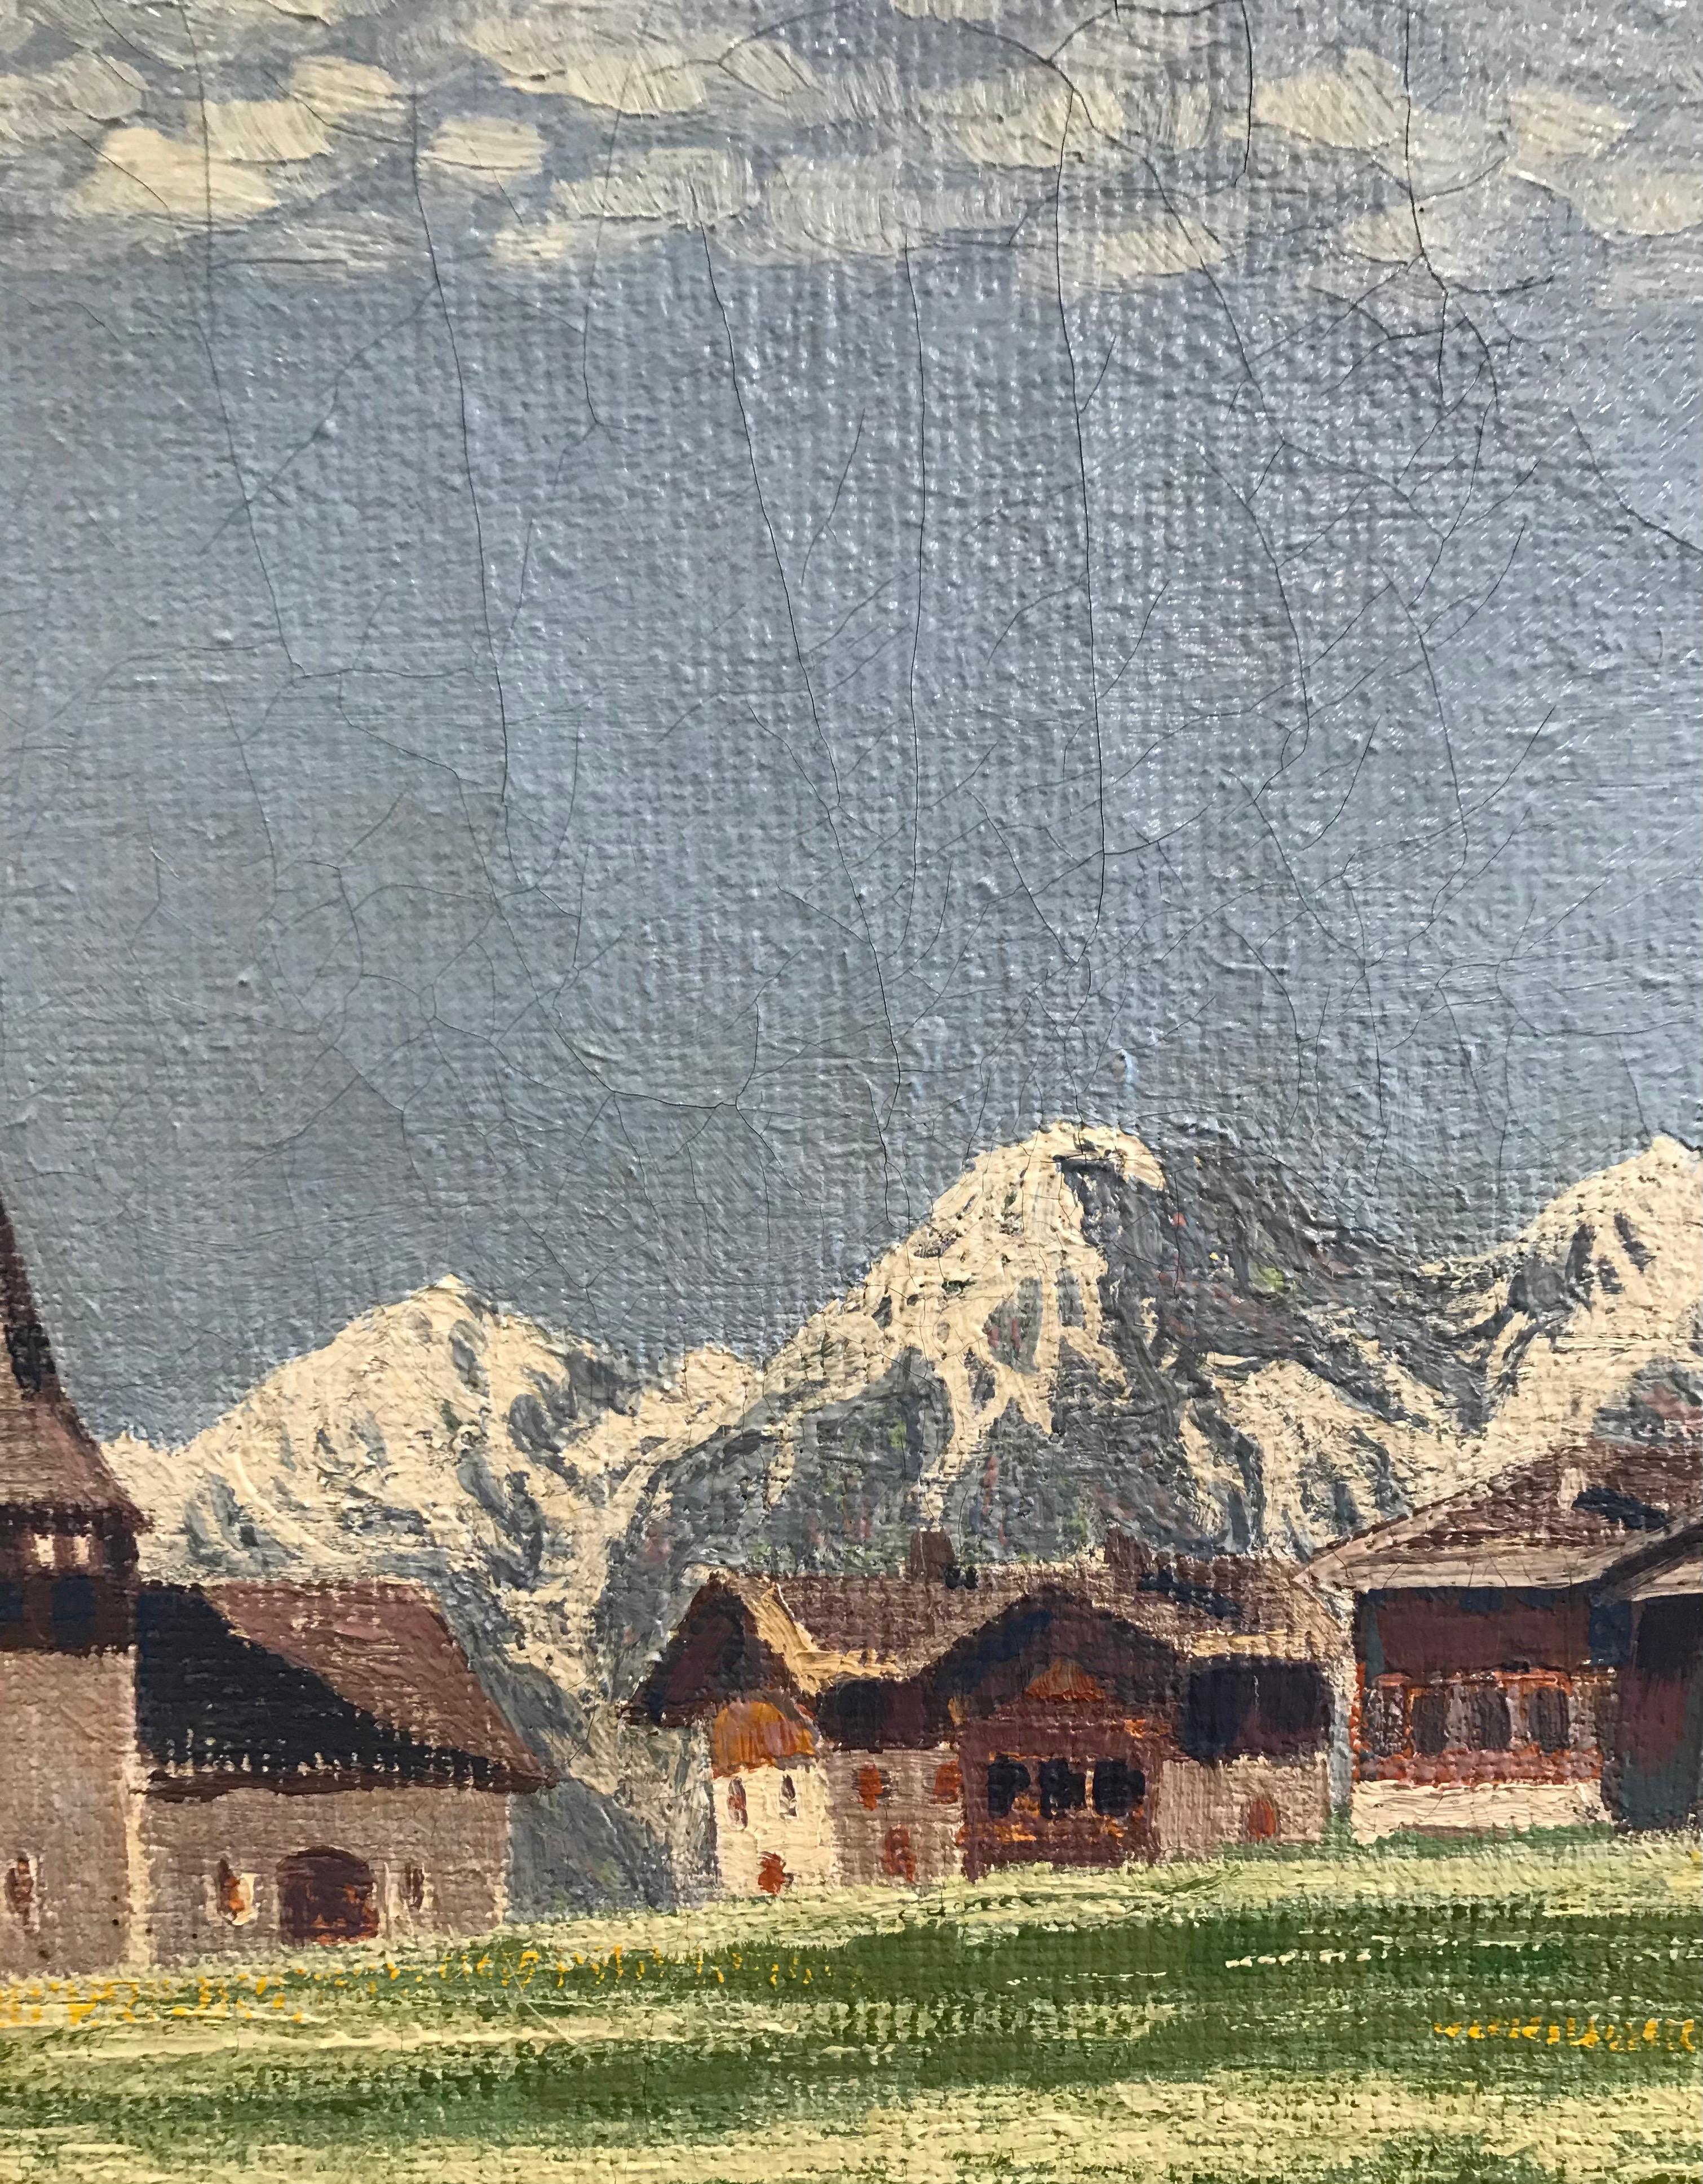 Swiss painter

Work on canvas